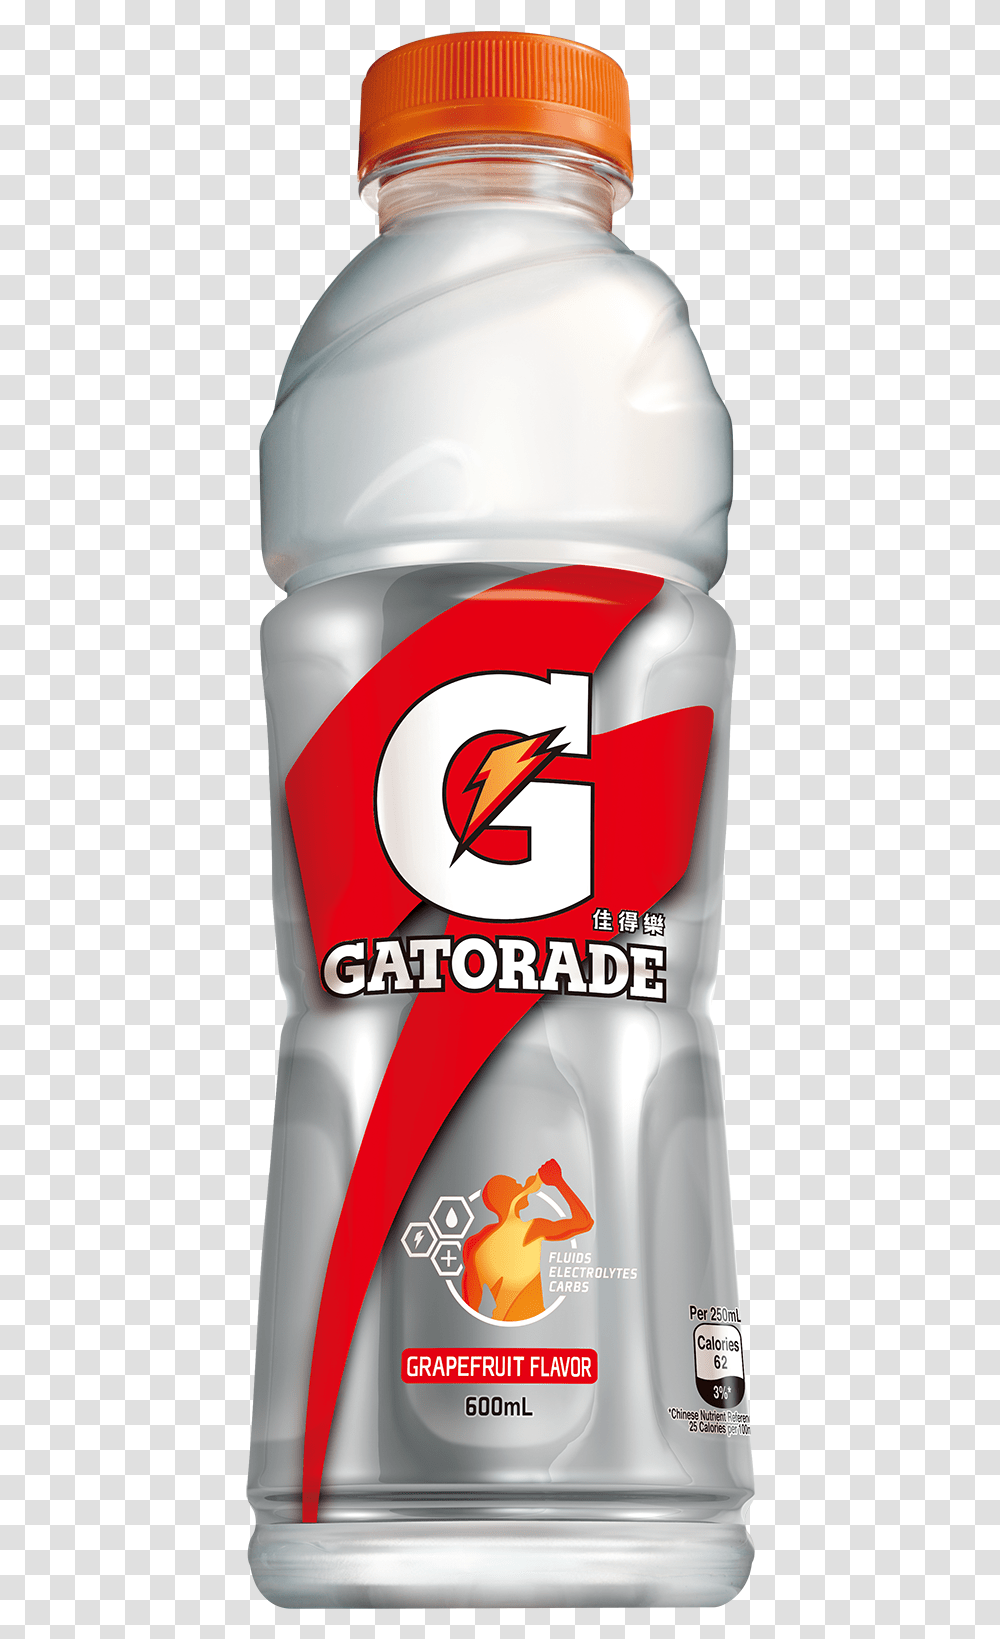 Gatorade Background Gatorade, Soda, Beverage, Drink, Fire Hydrant Transparent Png